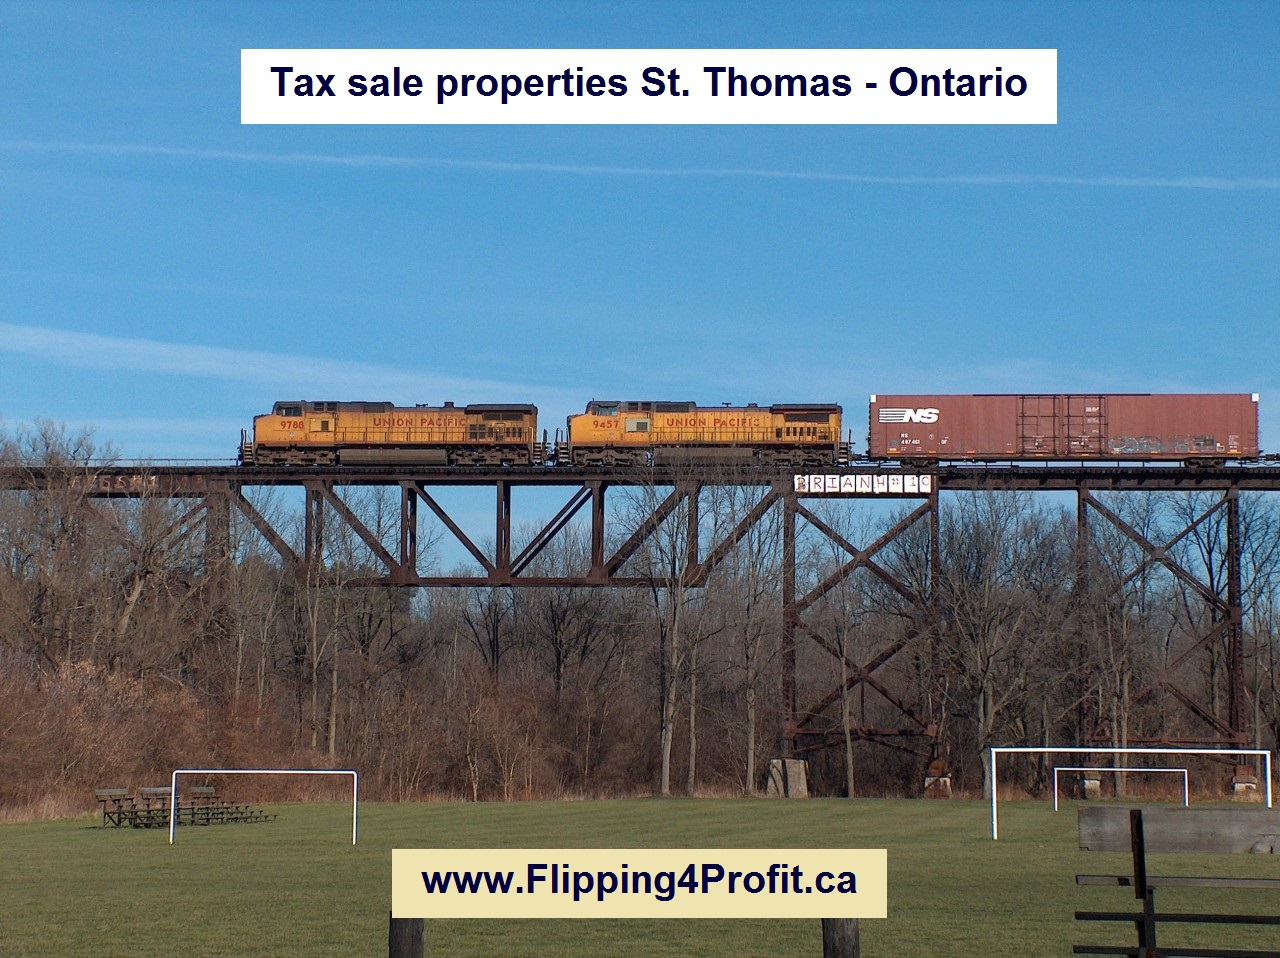 Tax sale properties St. Thomas - Ontario - Flipping4Profit.ca